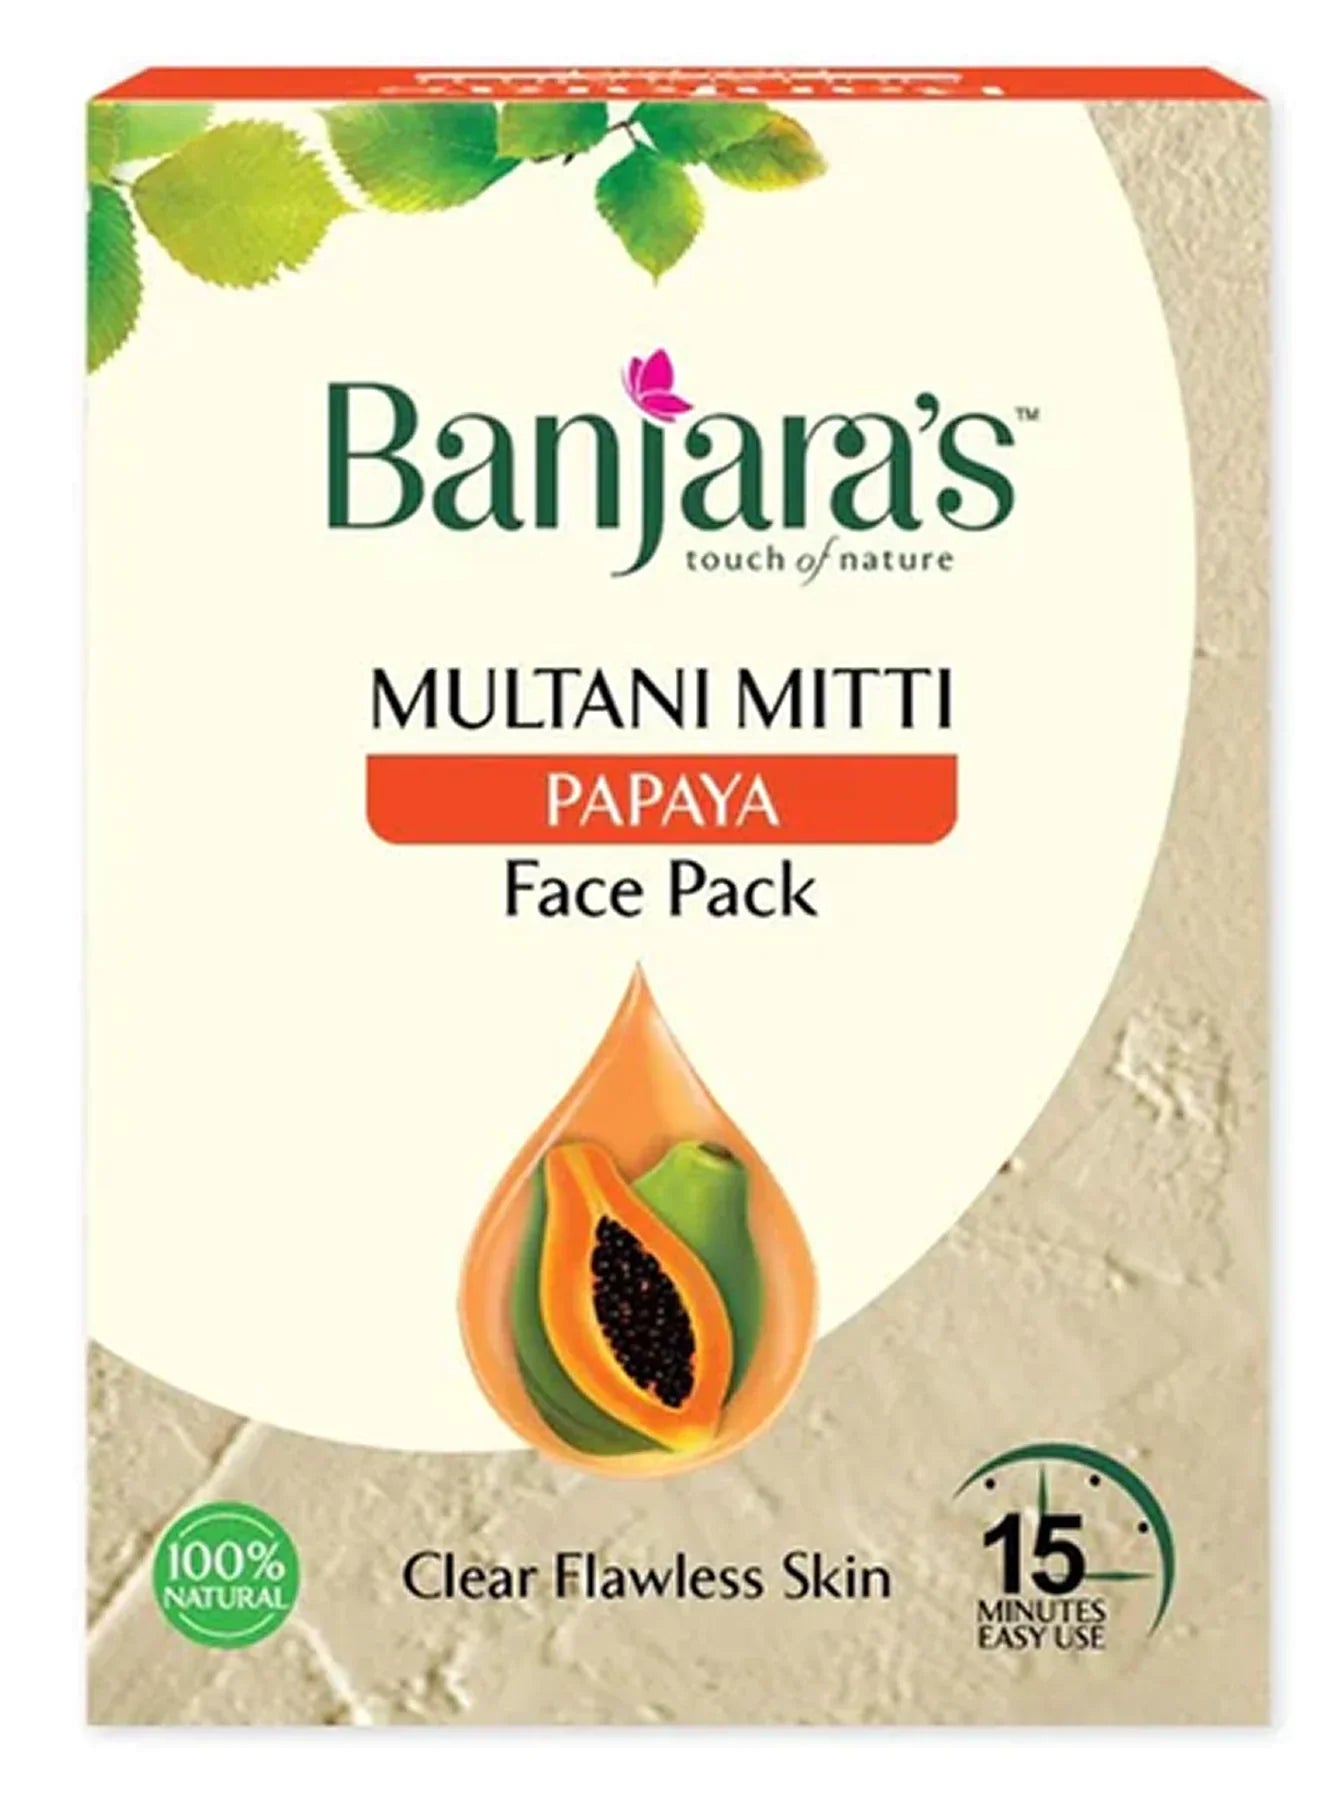 Banjaras Multani Mitti Papaya Face Pack 100g Value Pack of 3 